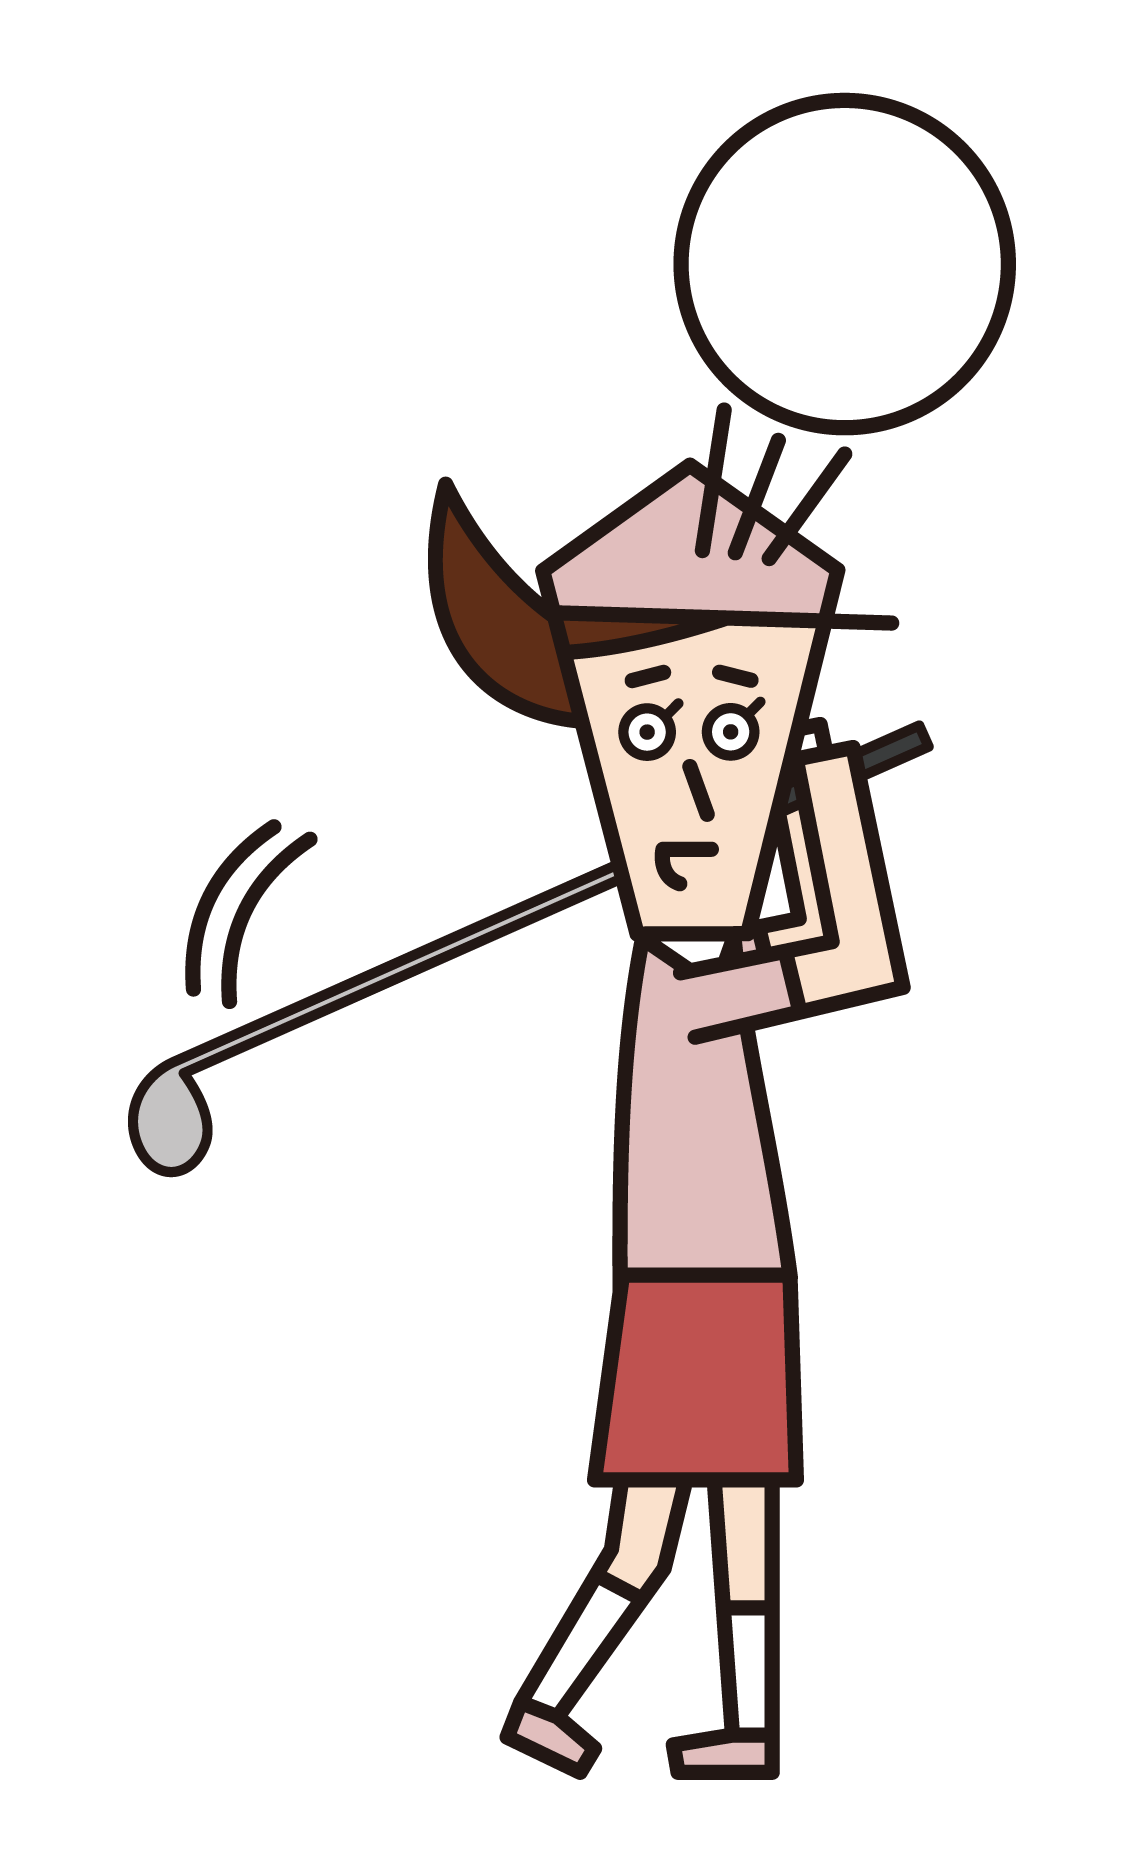 Illustration of a man swinging in golf